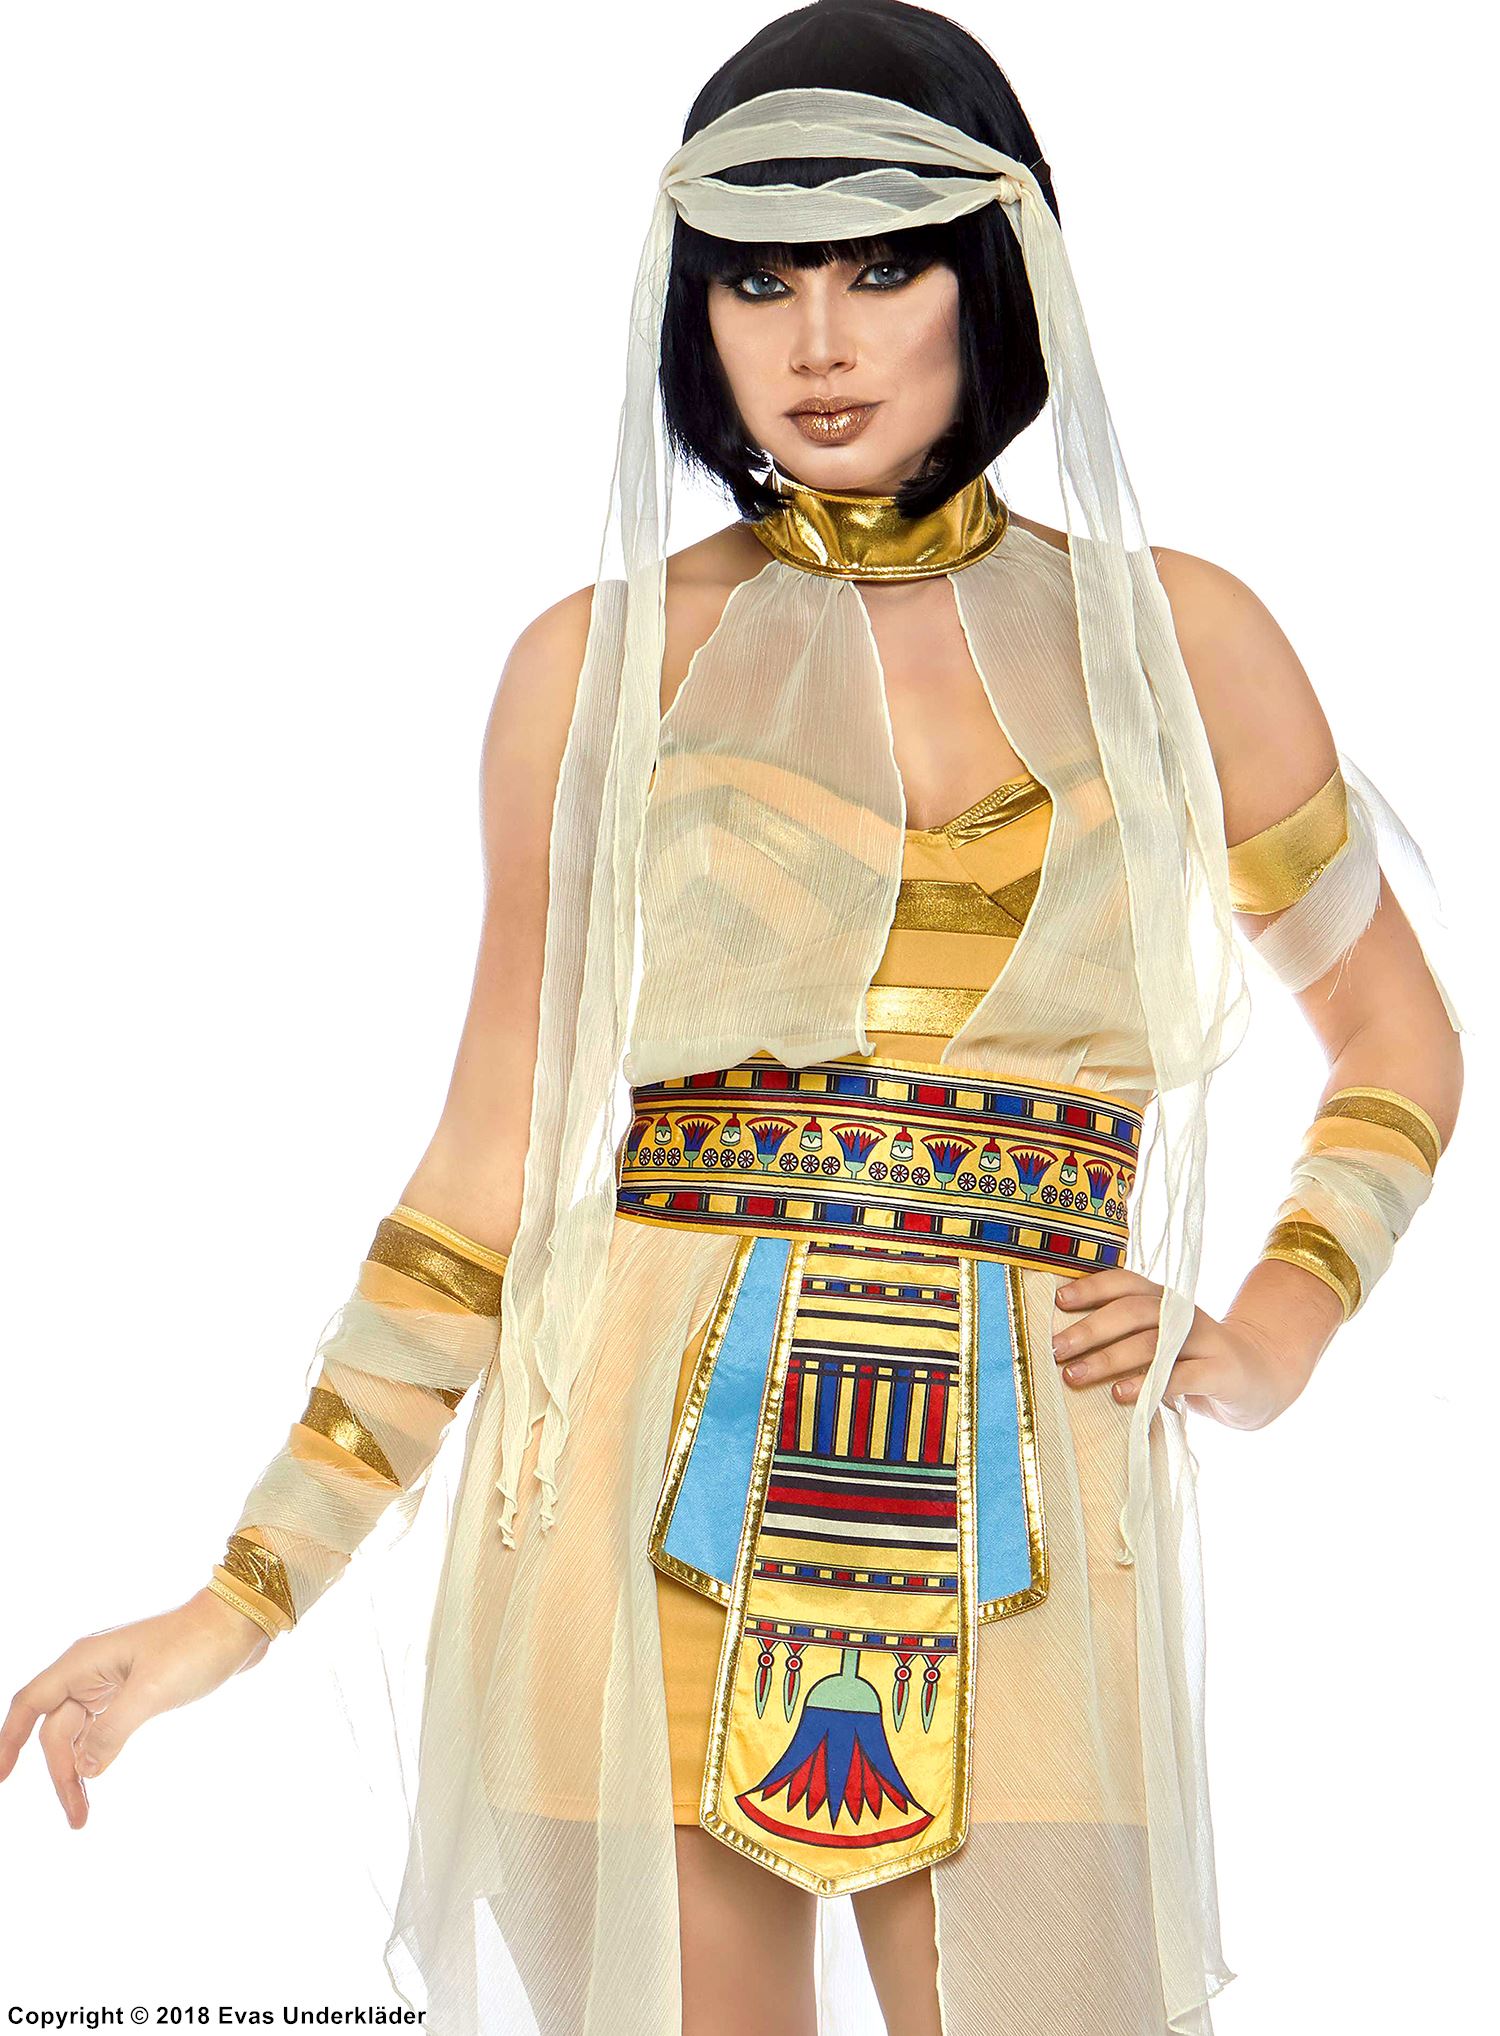 Cleopatra mummy, costume dress, shiny trim